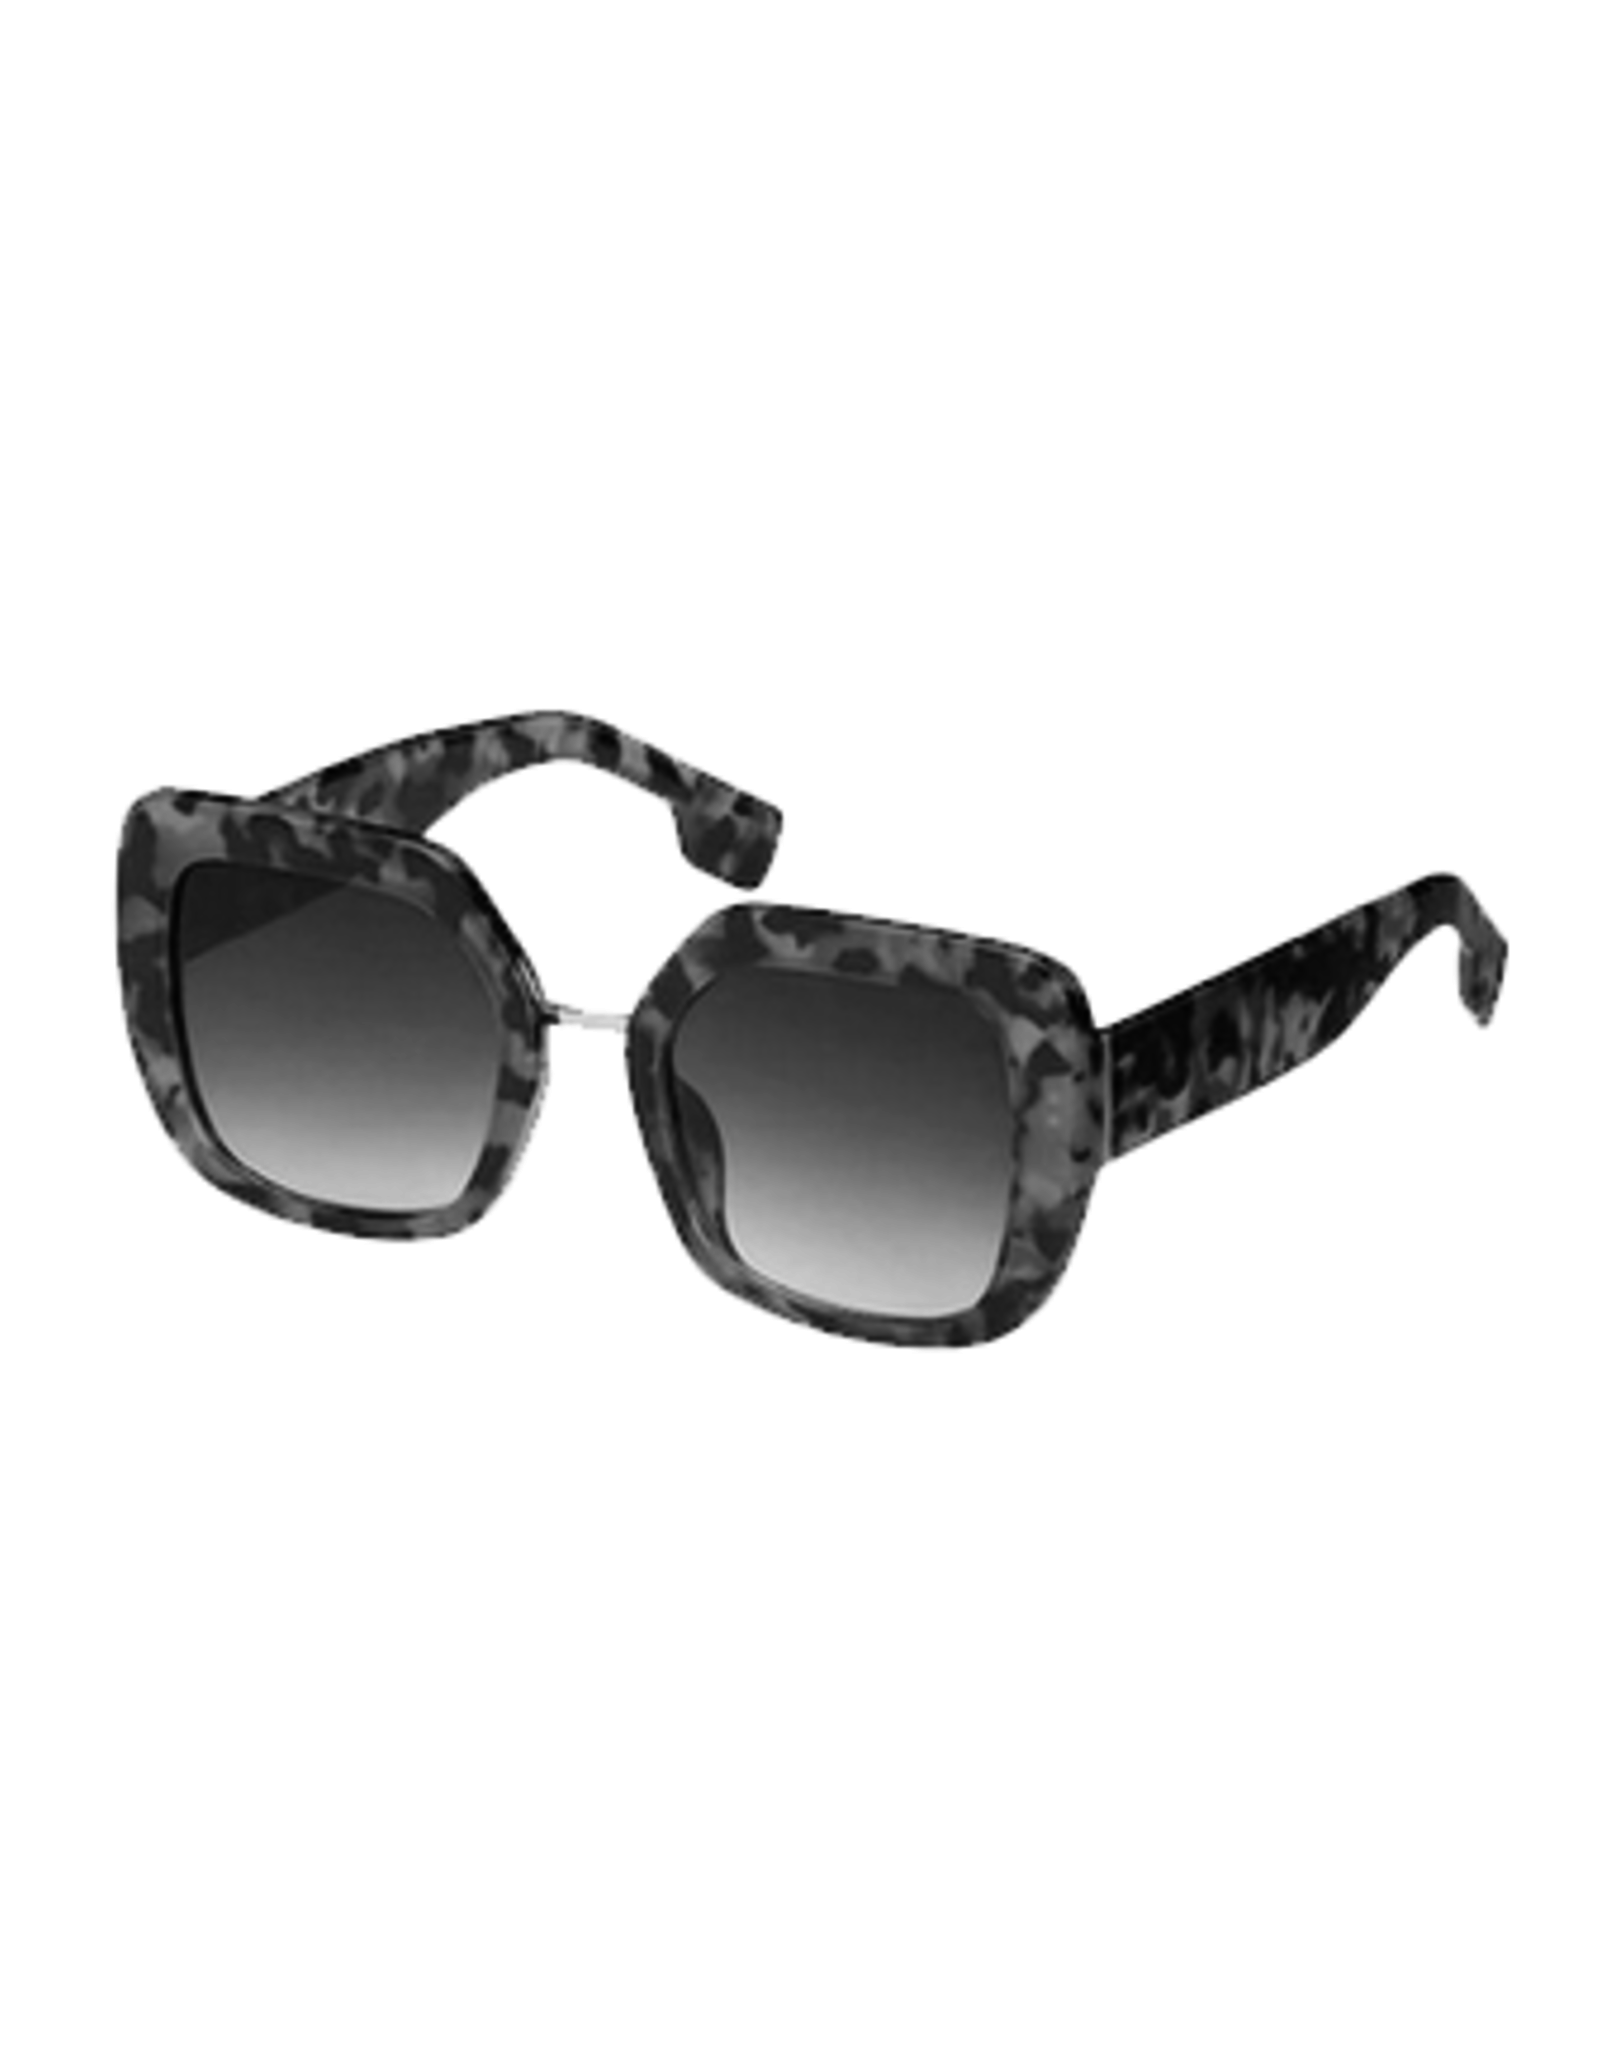 Boxy Sunglasses (3 Colors!)